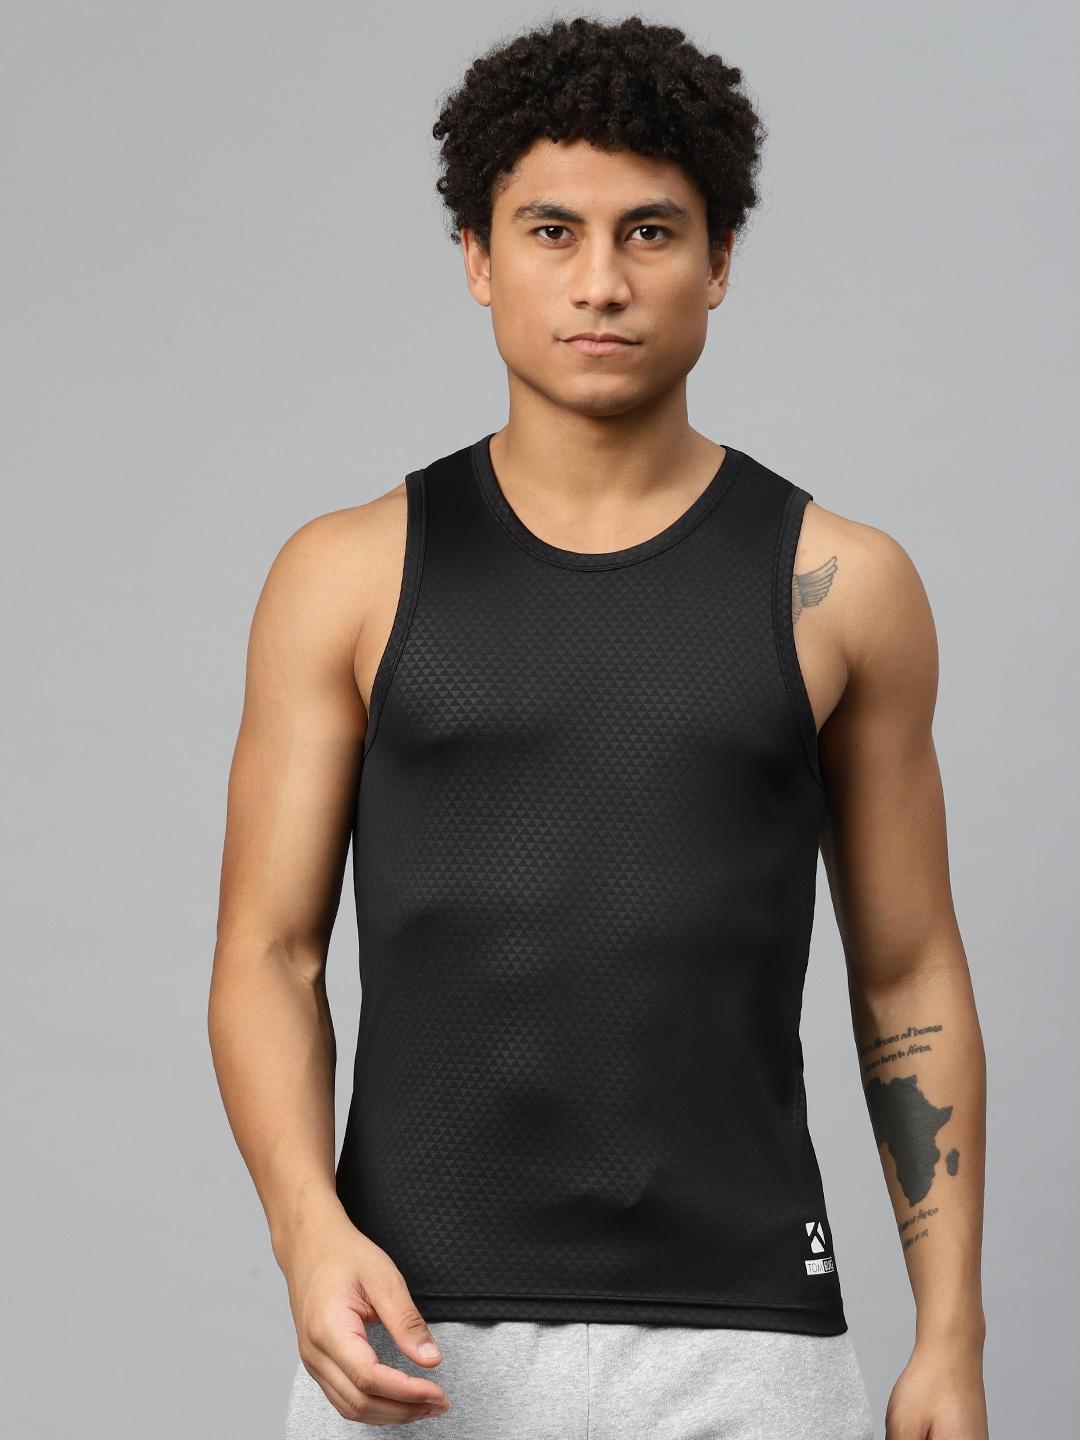 tom-burg-printed-gym-vest